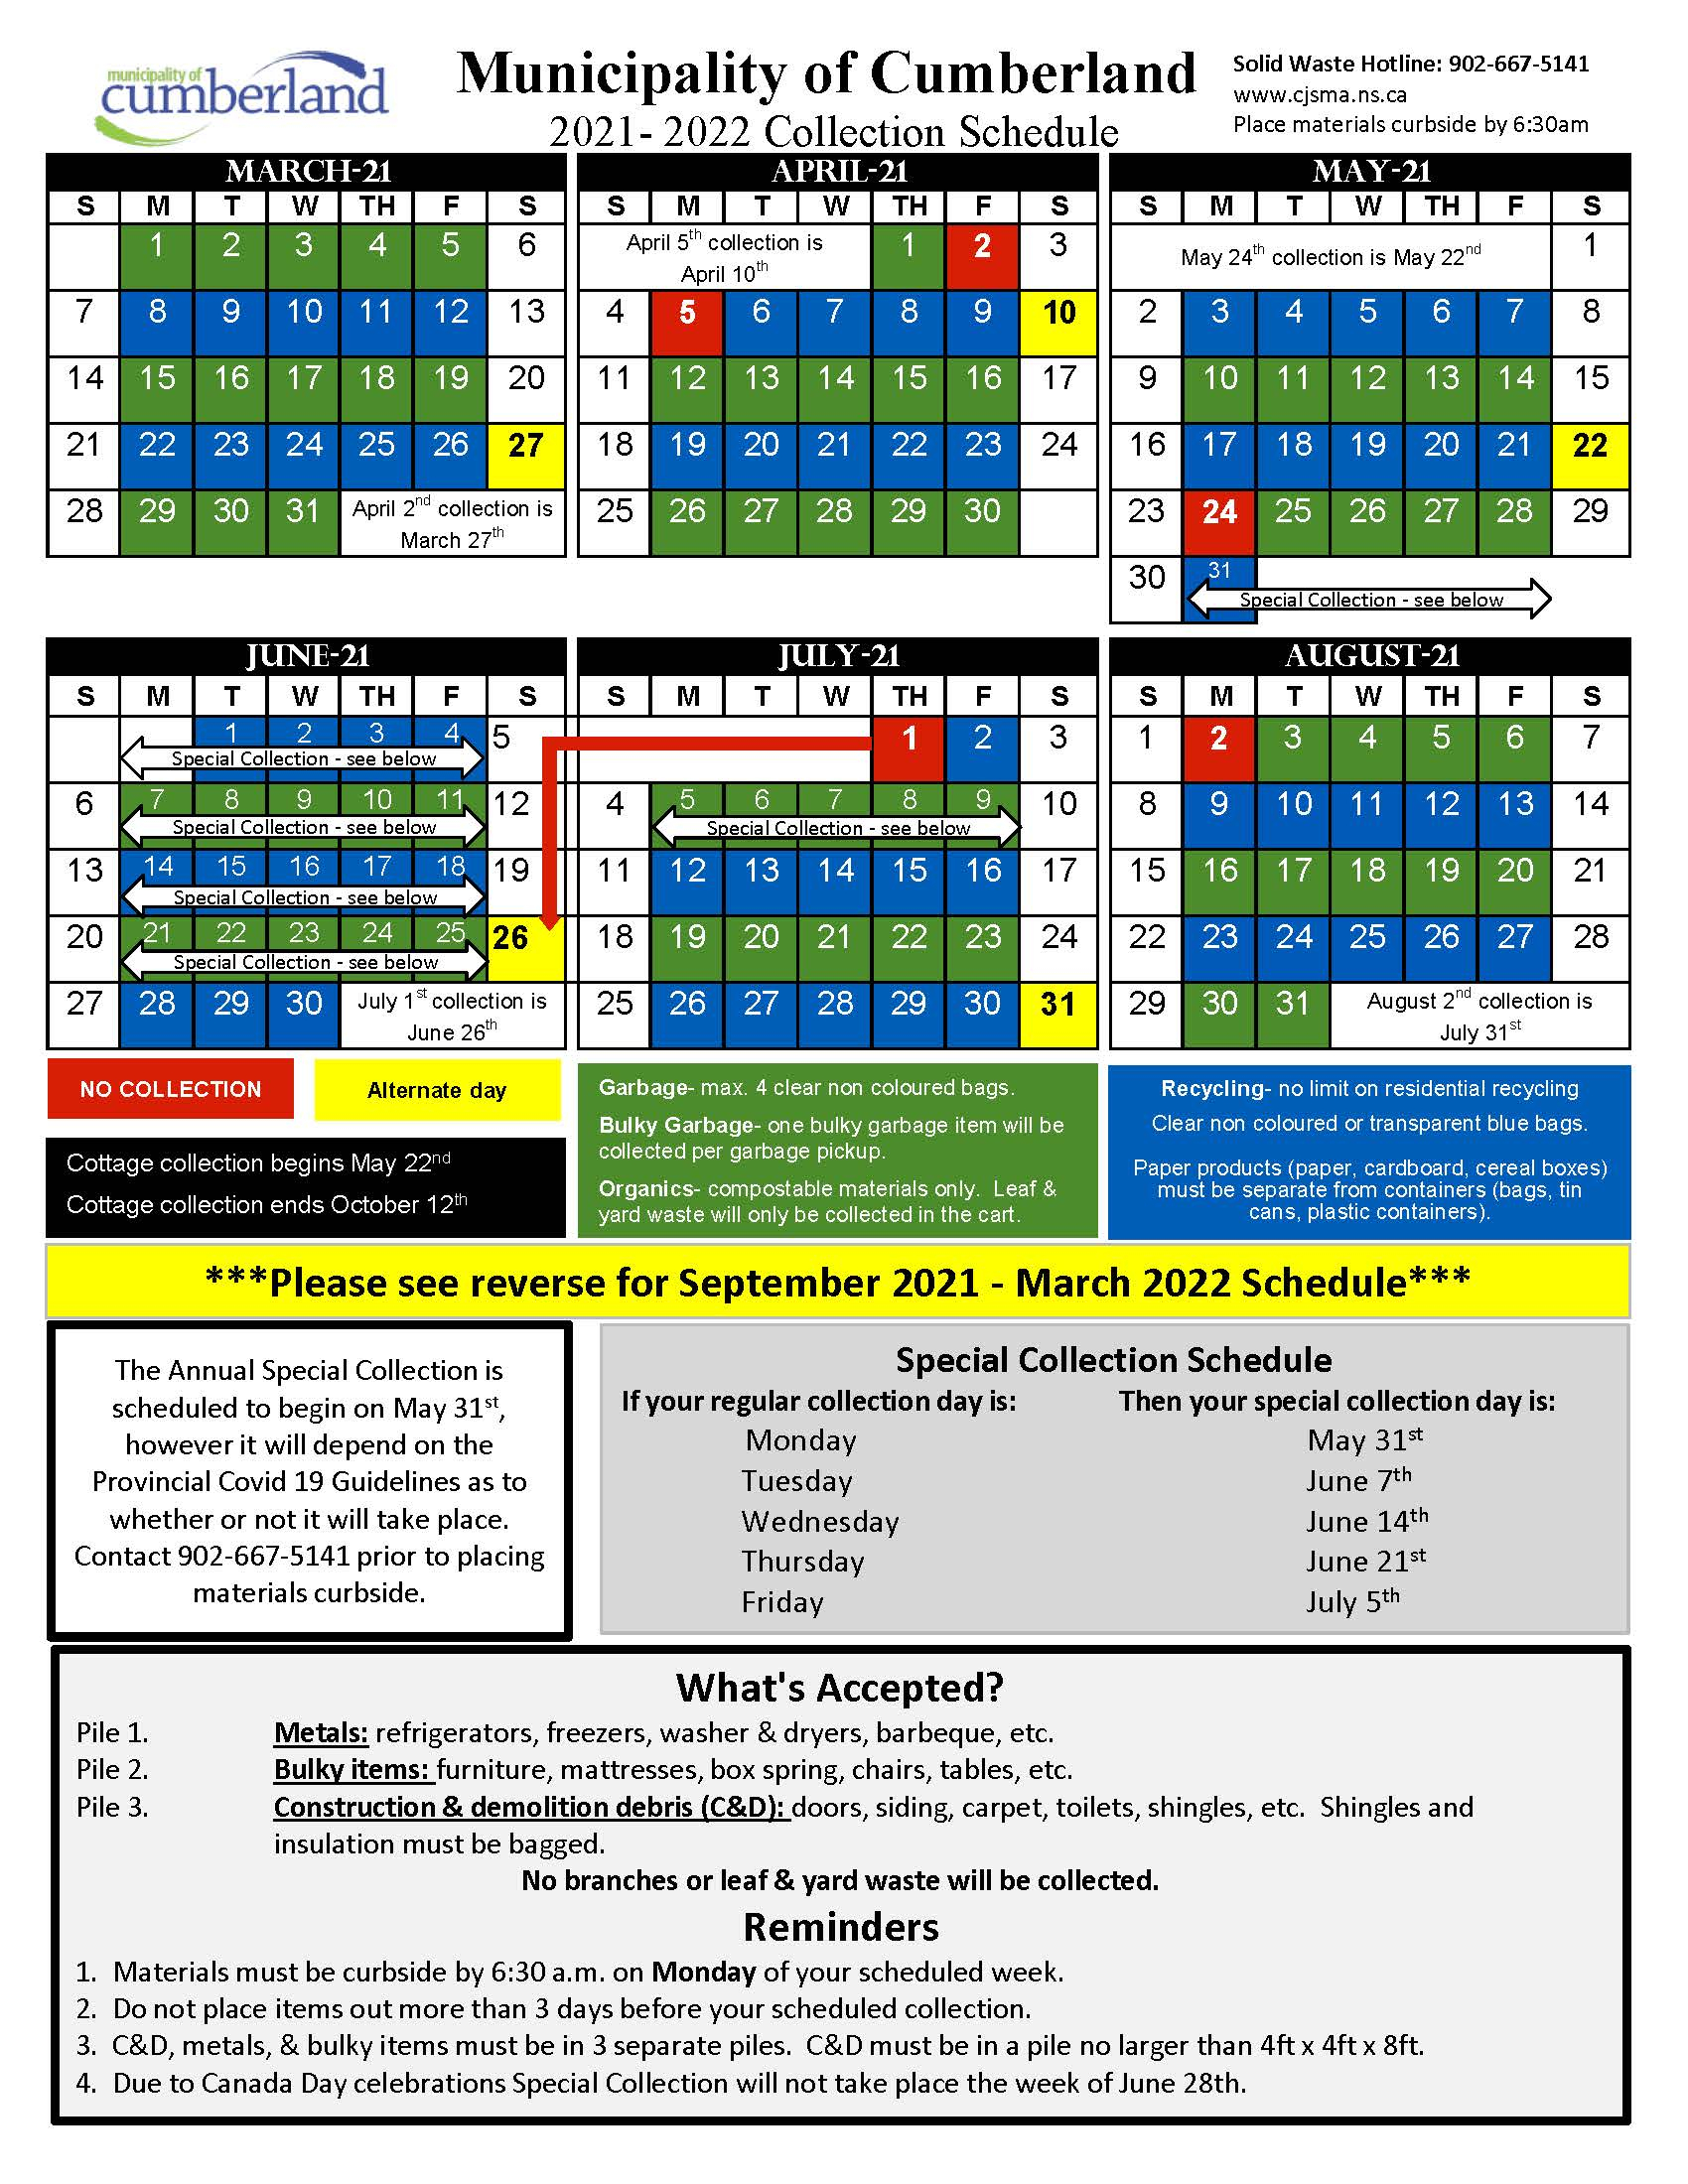 County Waste Holiday Schedule 2022 Season Schedule 2022